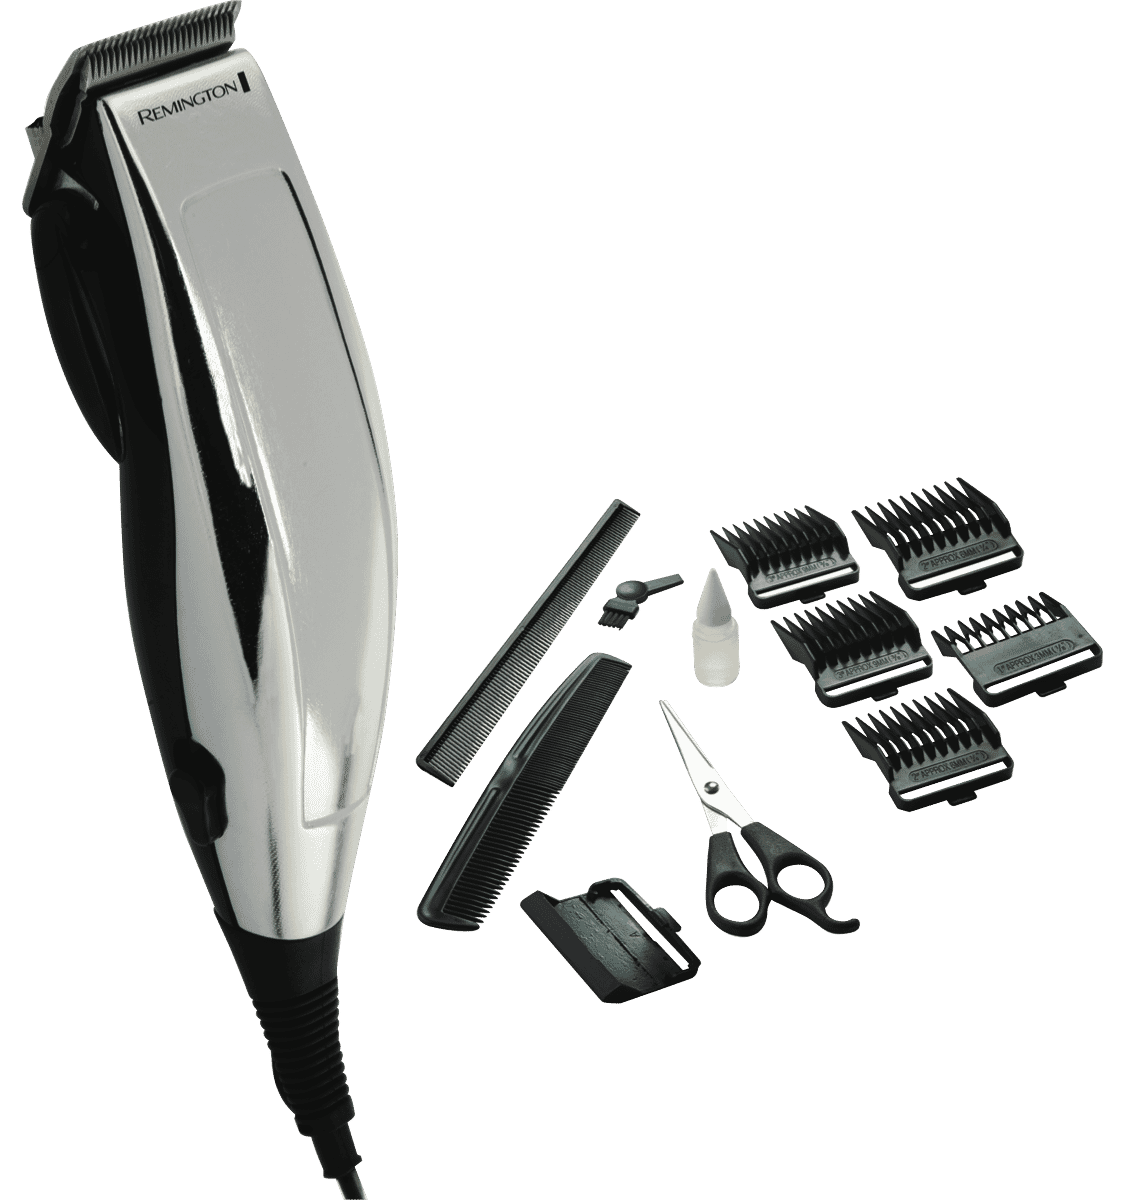 1.3 remington hc6550 cordless hair trimmer